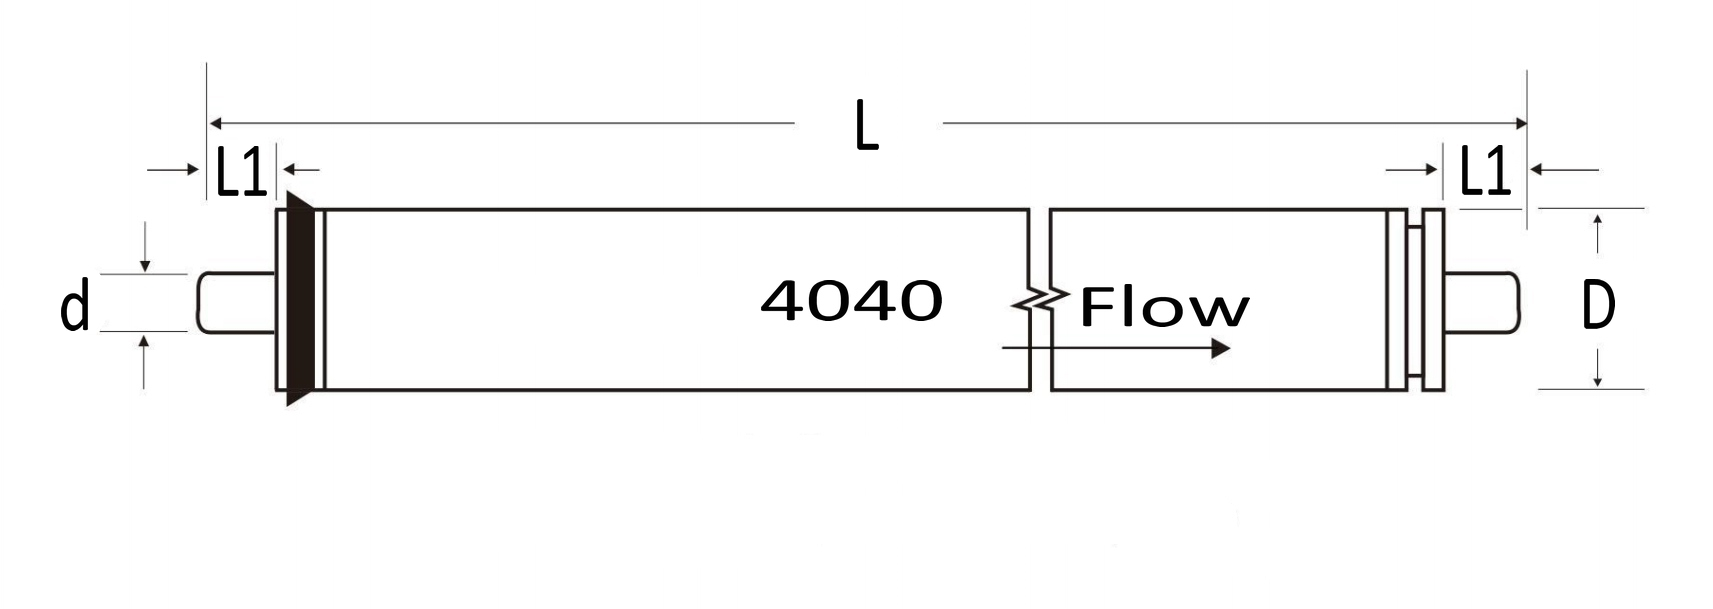 DuPont DOW Filmtec BW 30-4040 RO Membrane Equivalent Element Equivalent Dimensions